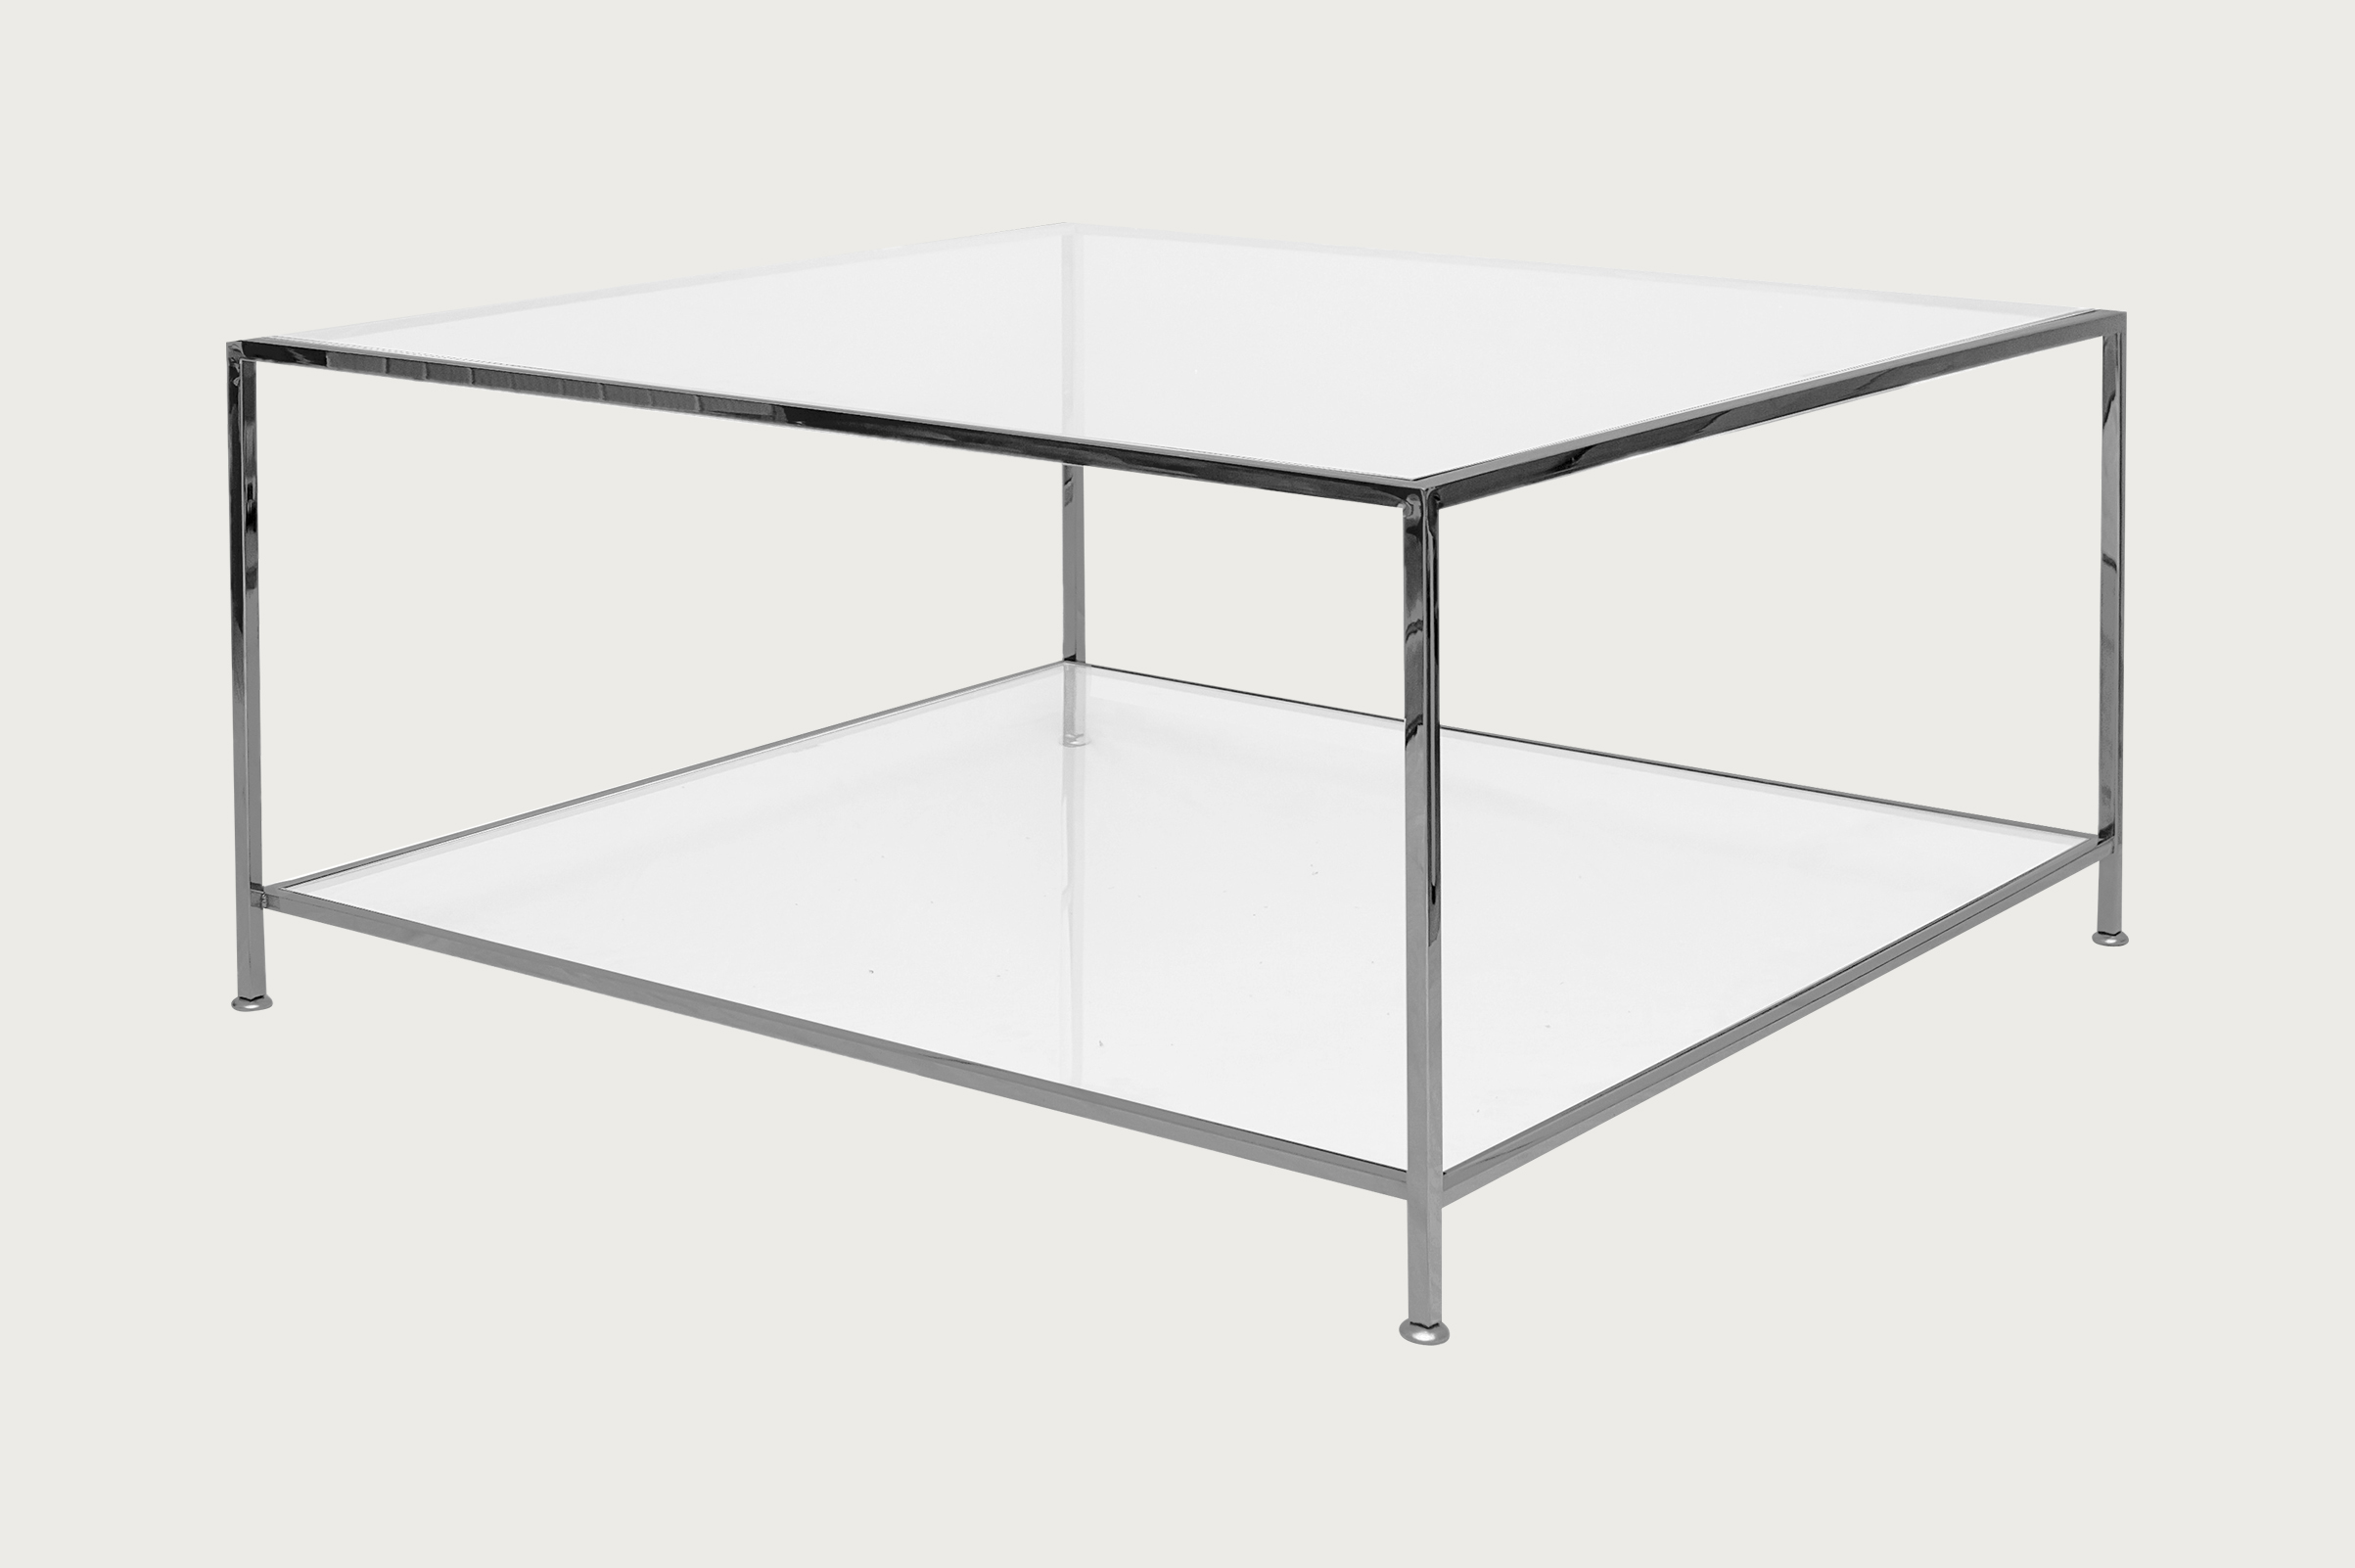 Big Square Table - 110 x 110 cm